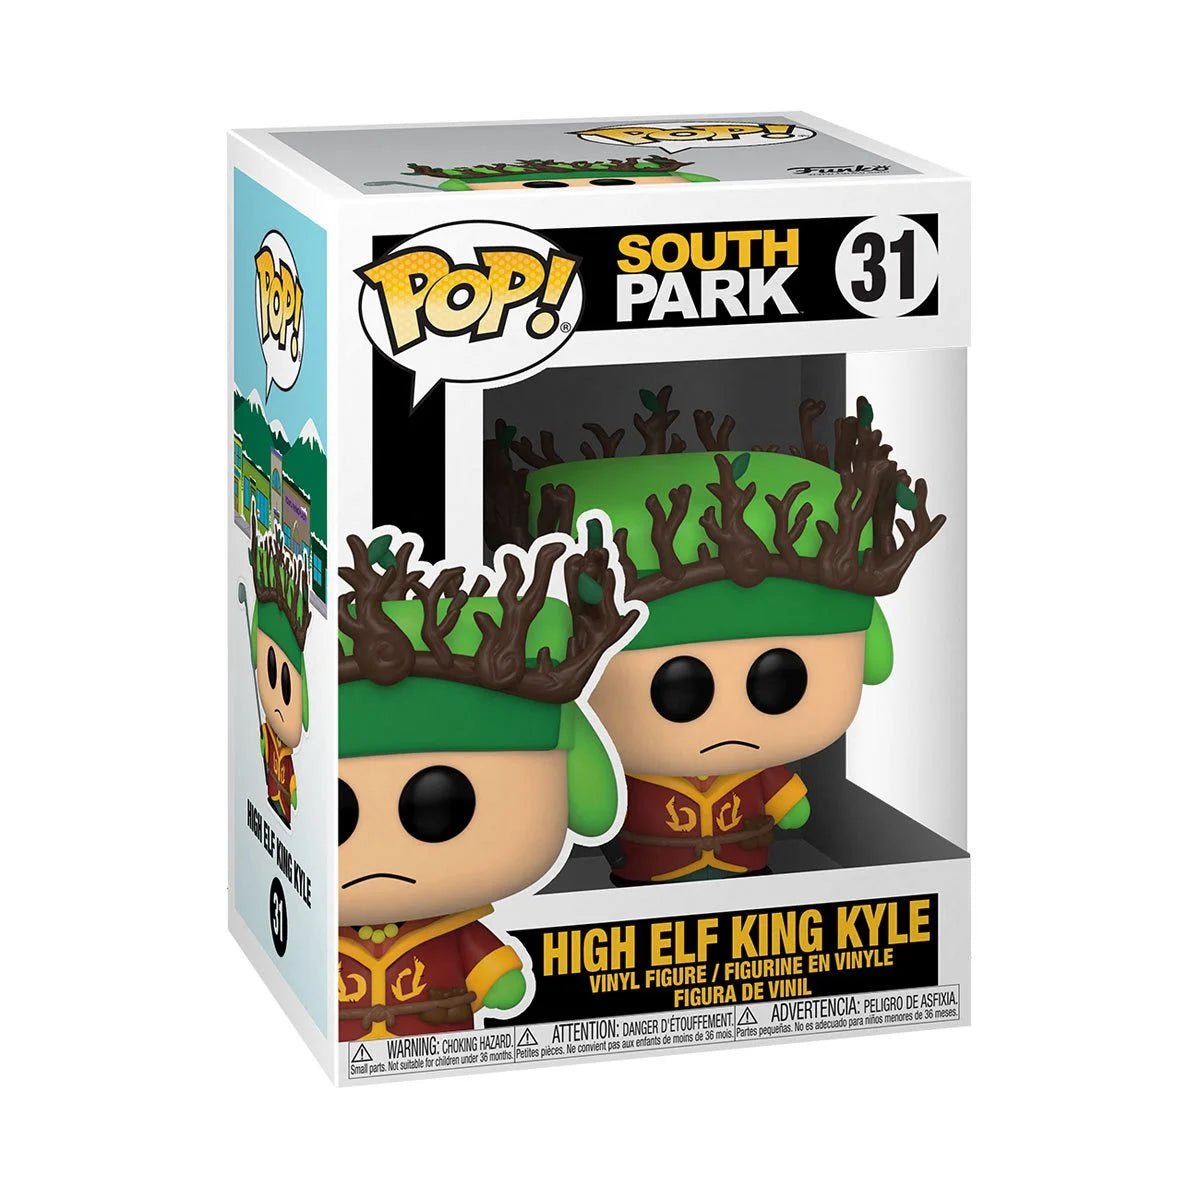 High Elf King Kyle South Park: The Stick of Truth Pop! Vinyl Figure